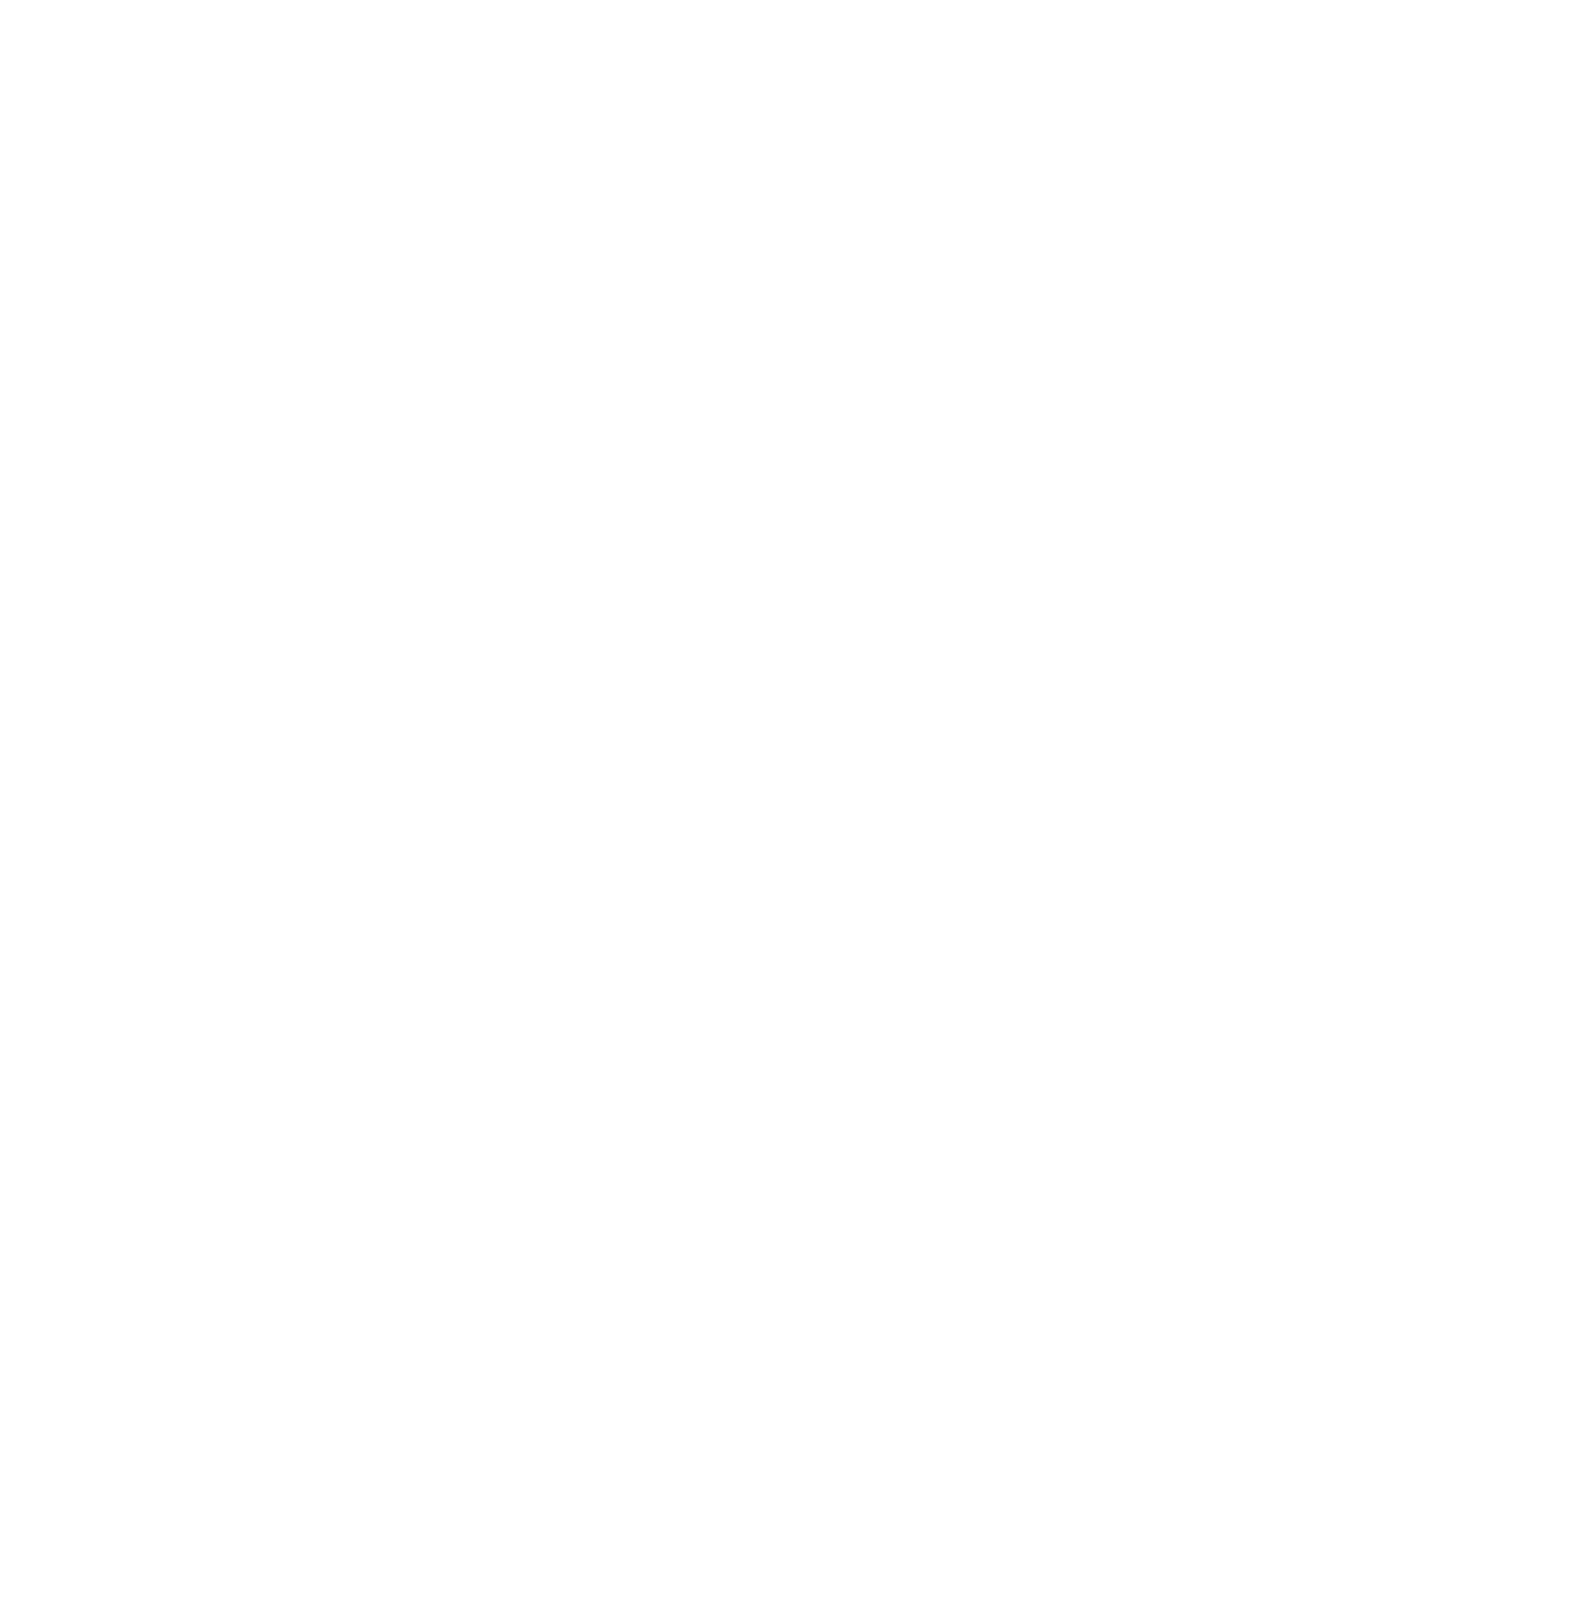 Novavax logo for dark backgrounds (transparent PNG)